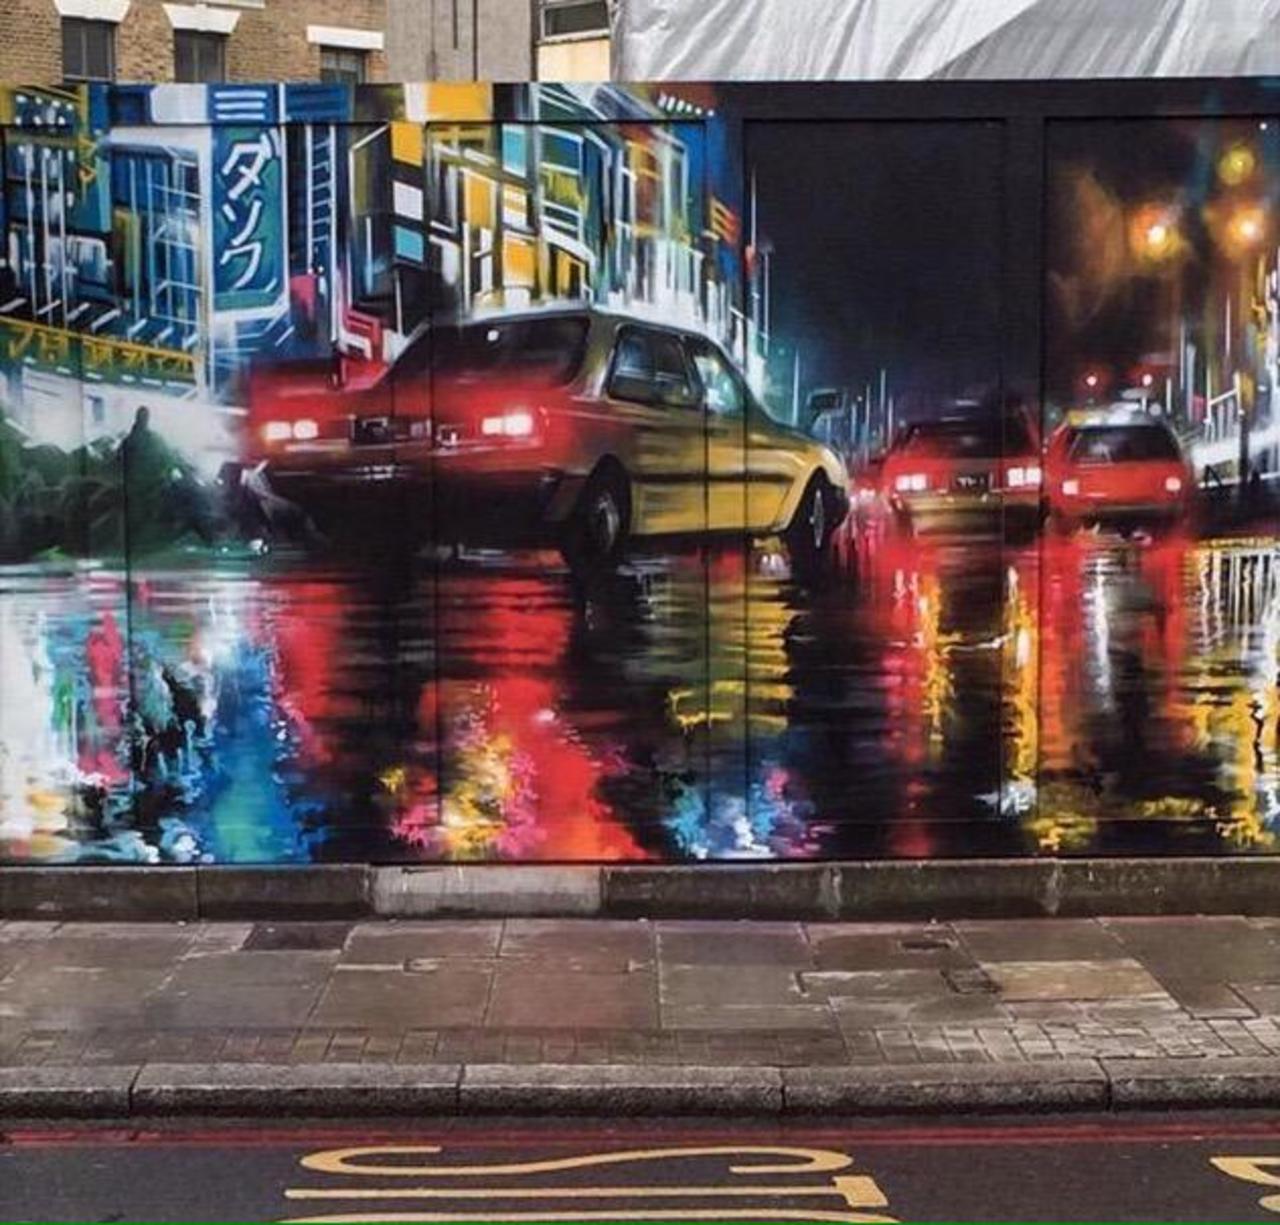 RT @jerome_coumet: .@DanKitchener - Londres
#art #mural #graffiti #streetart https://t.co/Cg3iLOz0XW
Via @GoogleStreetArt